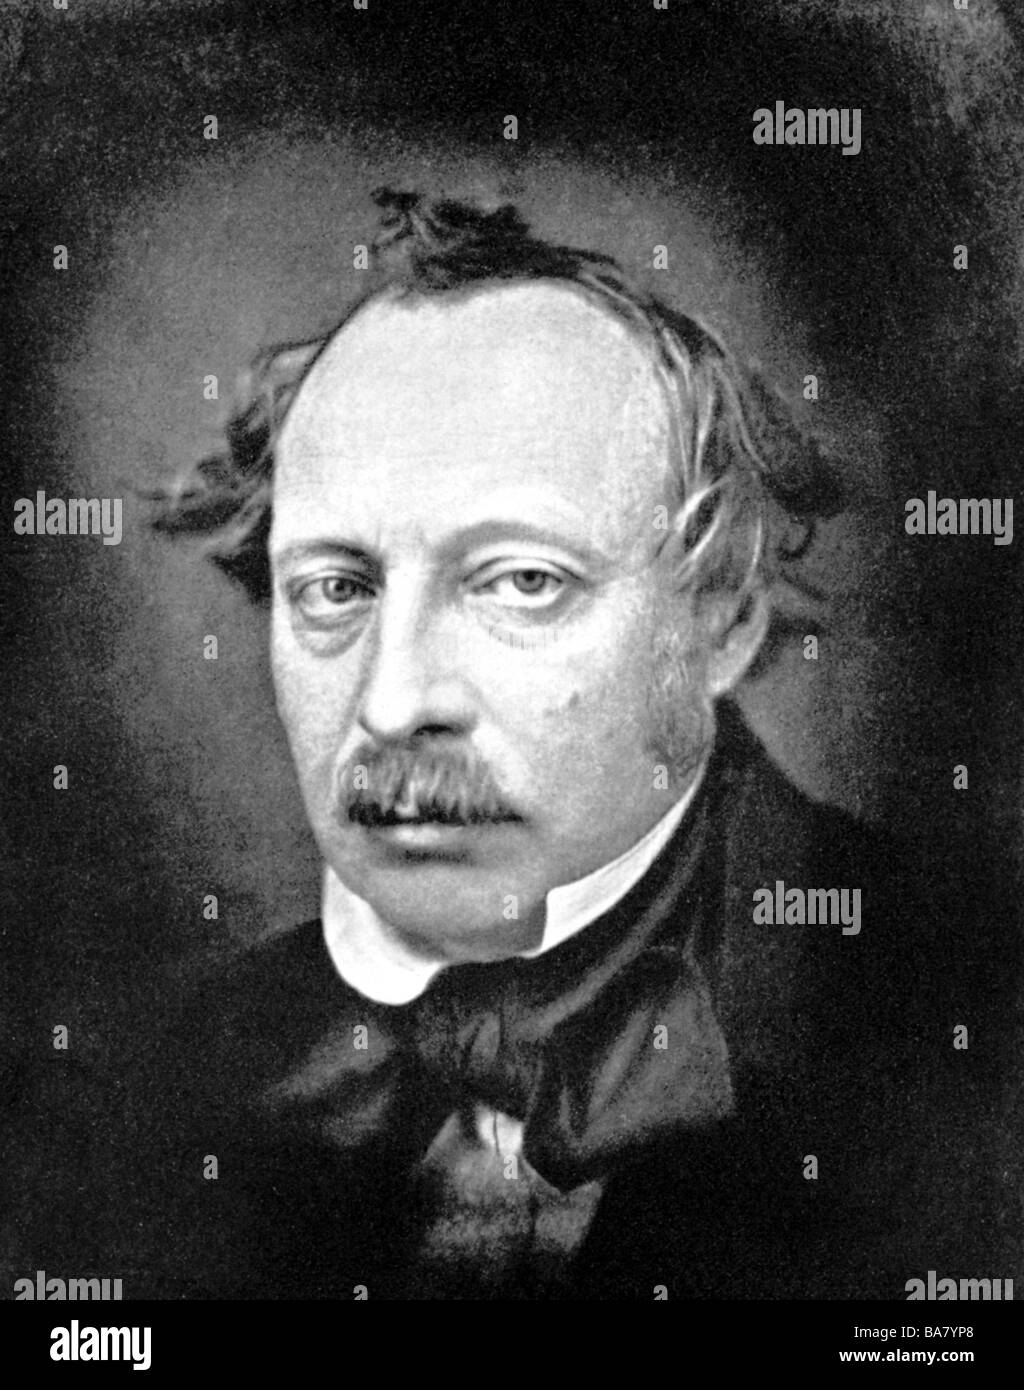 Ruge, Arnold, 13.9.1802 - 31.12.1880, German politician, author - ruge-arnold-1391802-31121880-german-politician-author-writer-portrait-BA7YP8